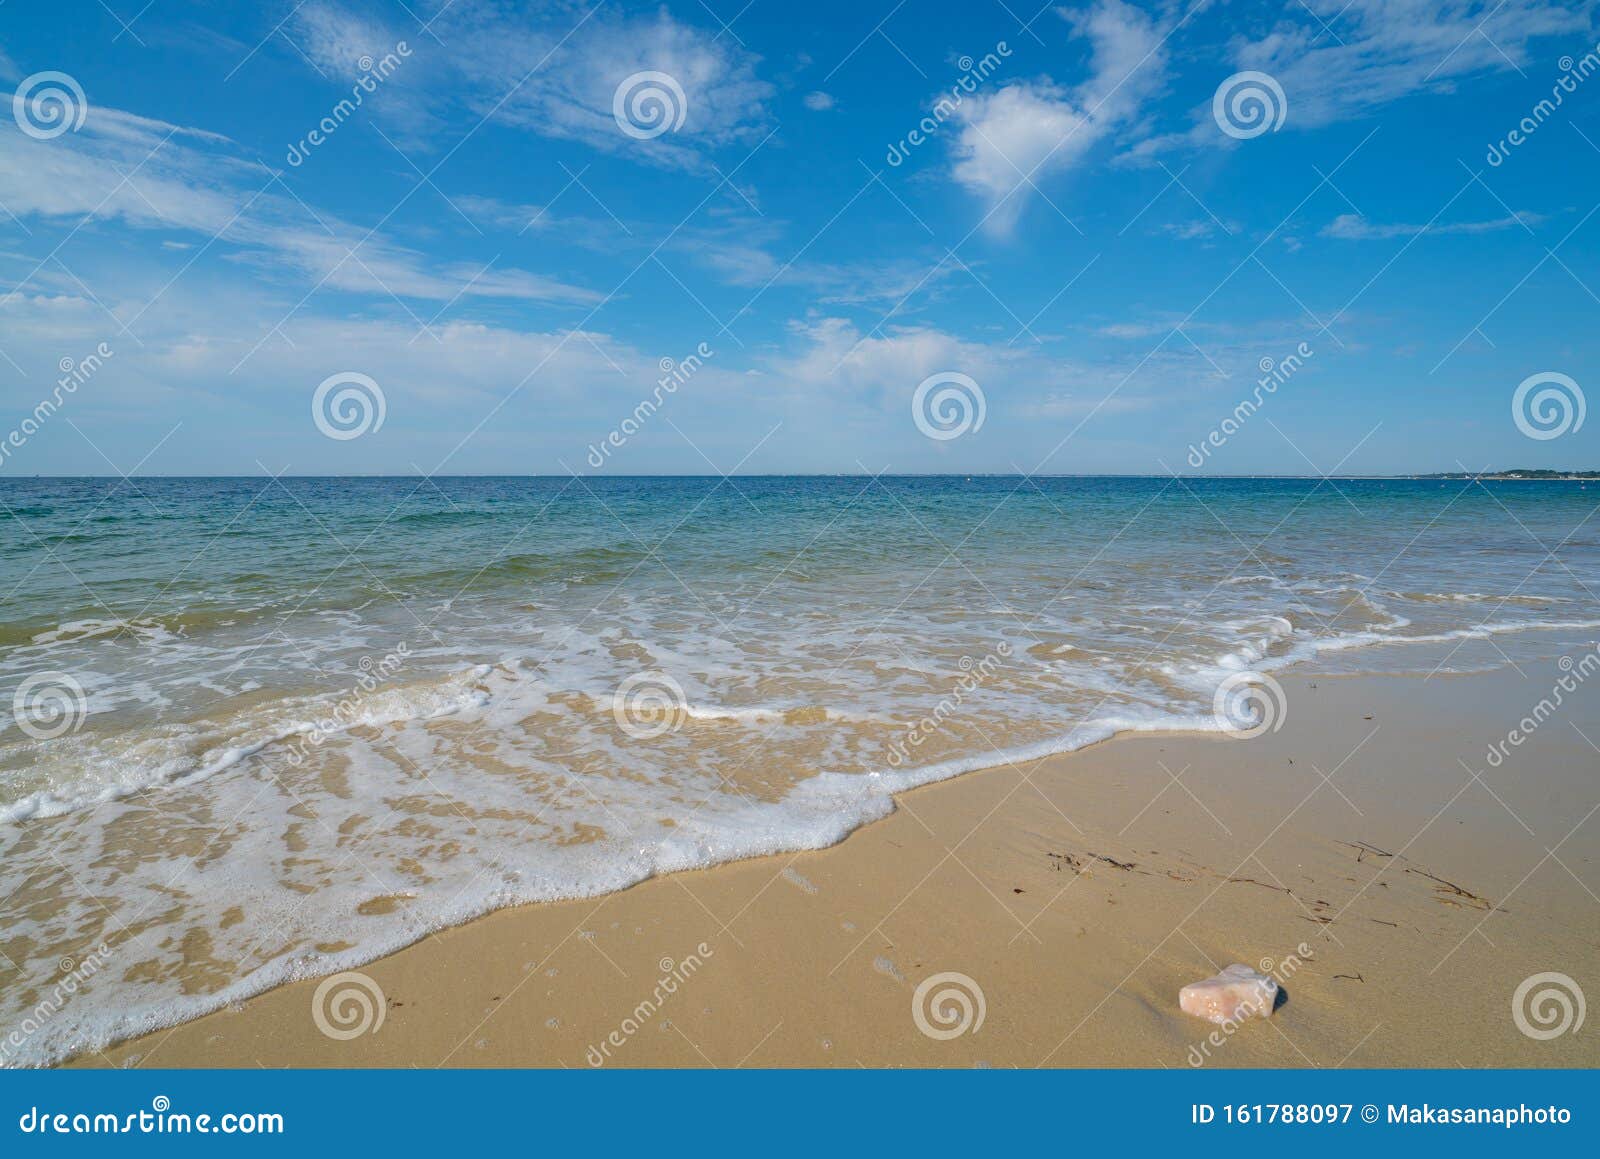 gentle waves on an empty sandy beach with a calm ocean